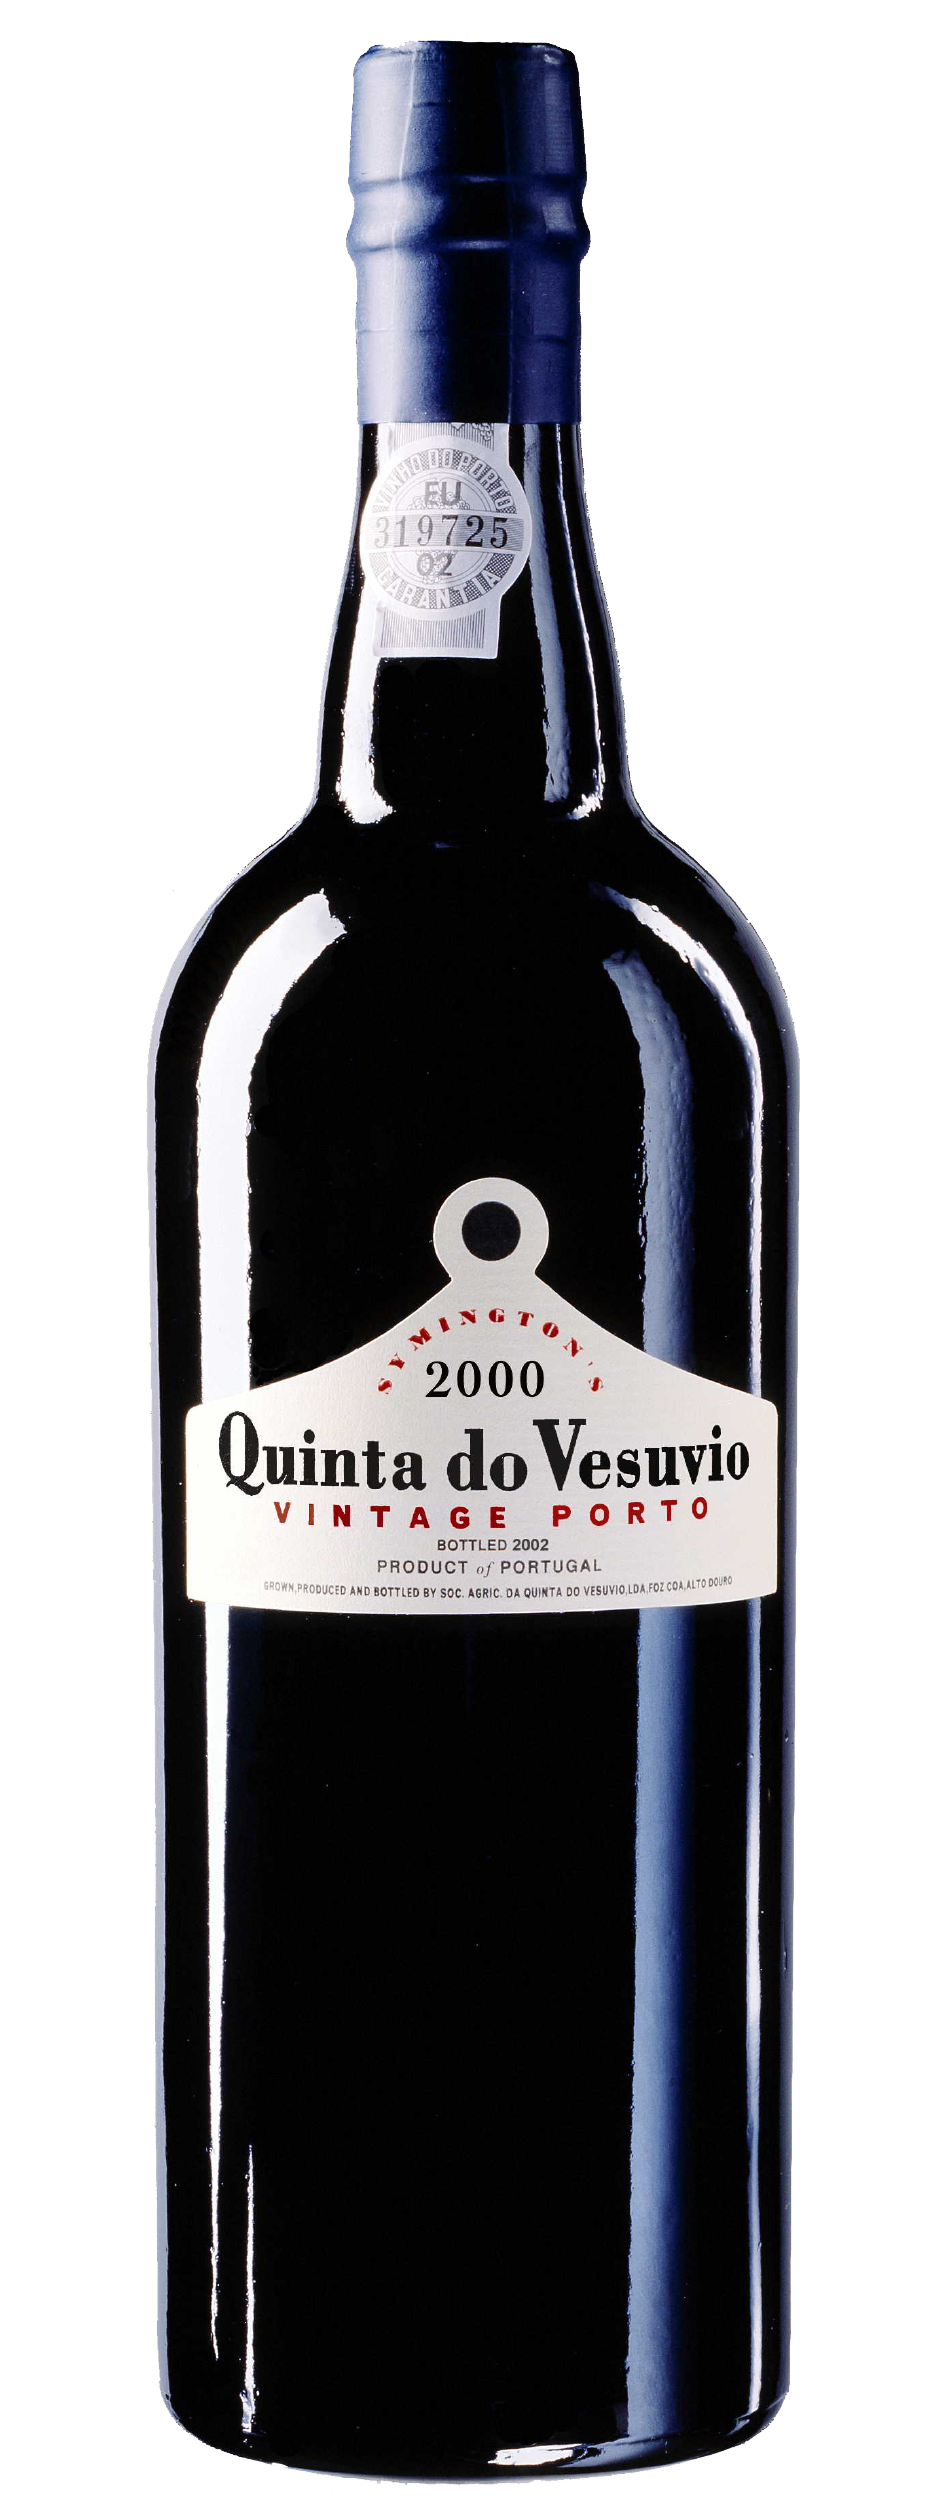 Product Image for QUINTA DO VESUVIO VINTAGE PORT 2000 - MAGNUM (1.5L)